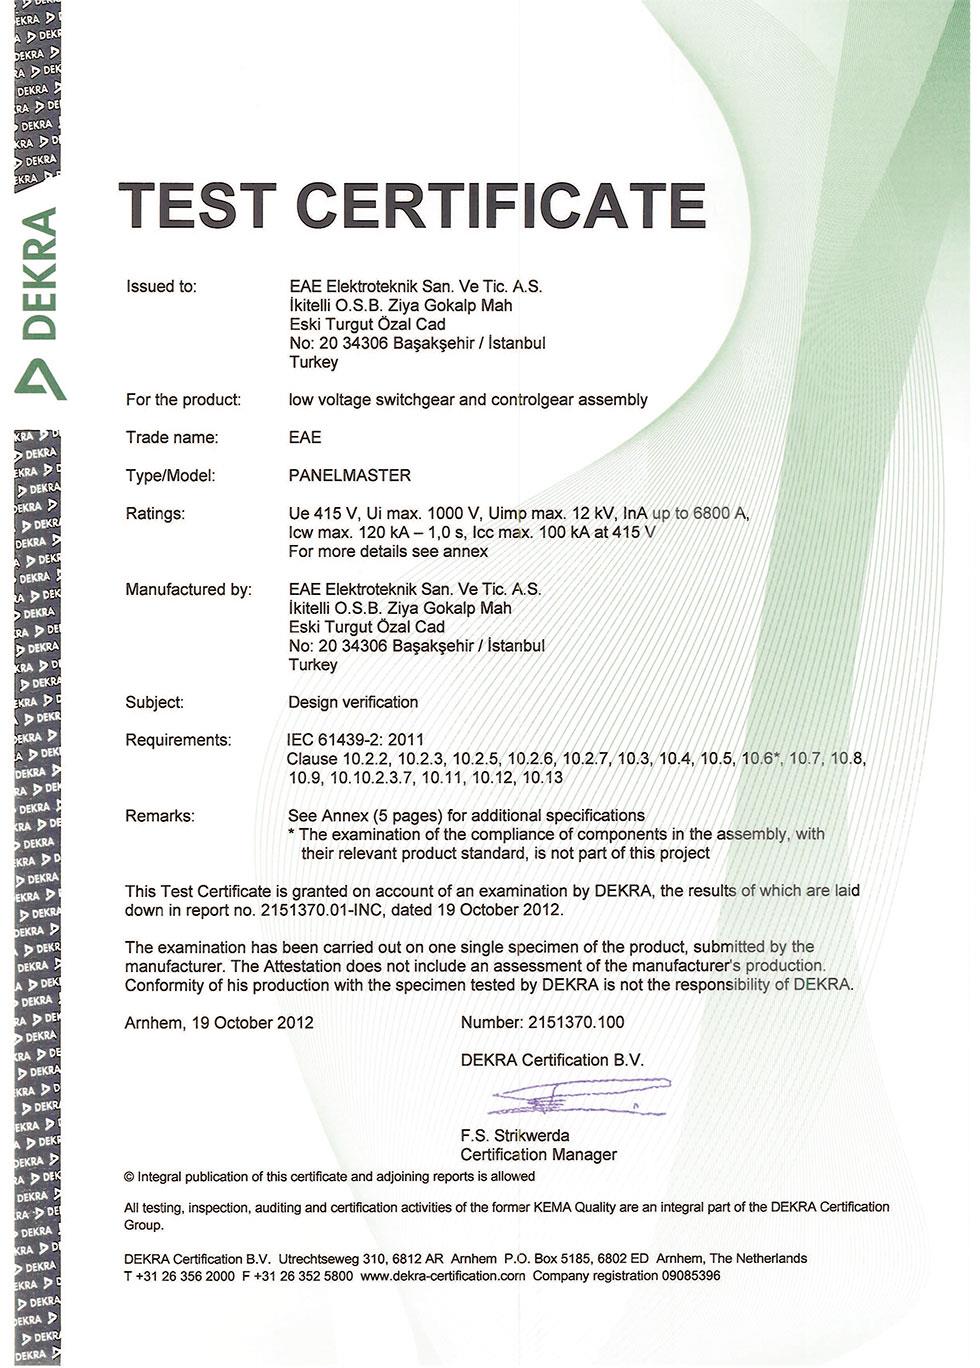 PanelMaster IEC 61439 Type Test Certificate (ABB Schneider Legrand)